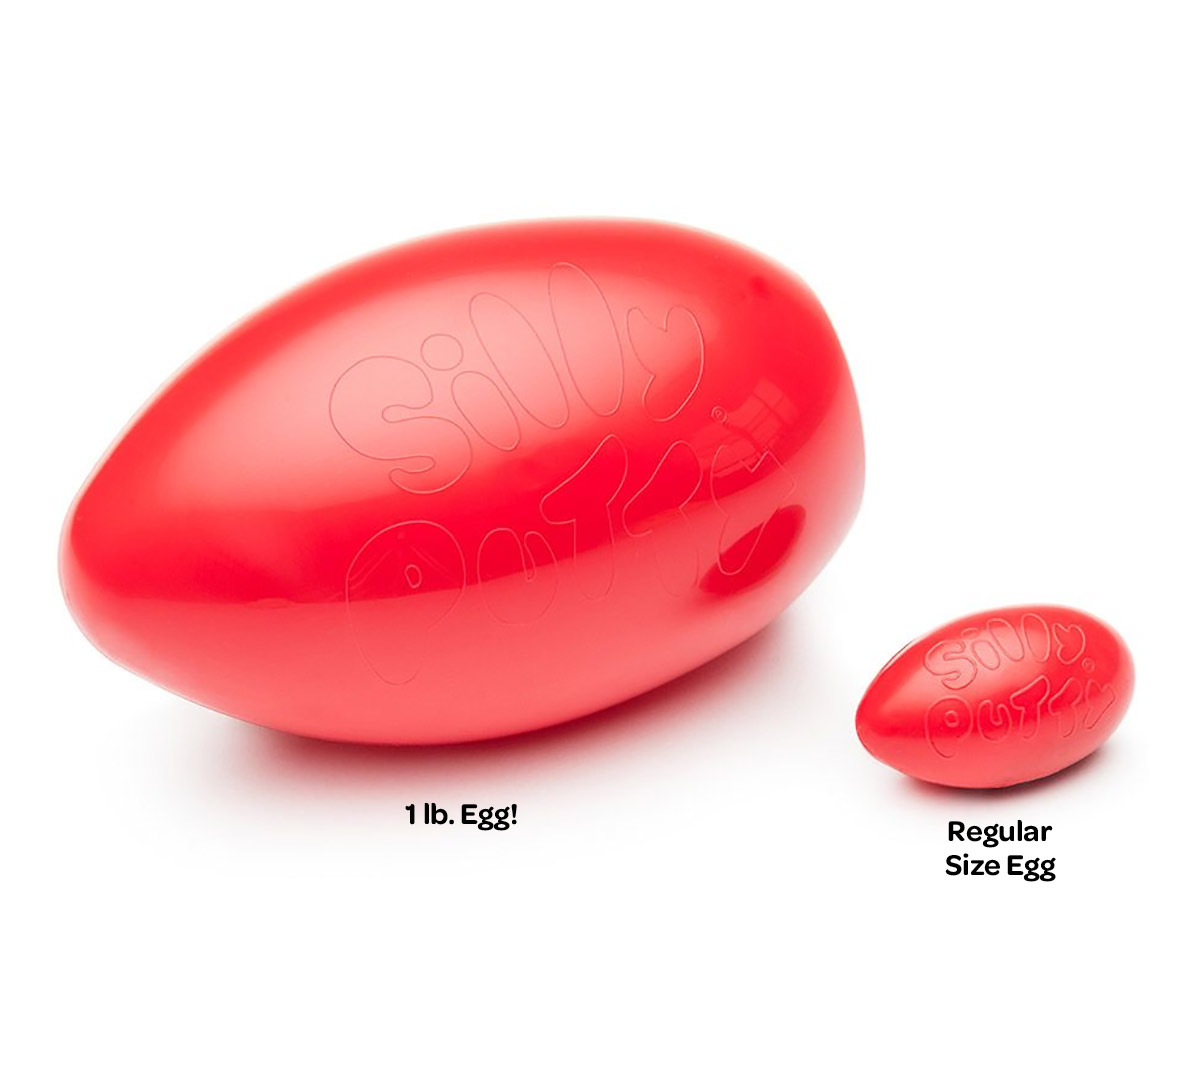 2x The Original Silly Putty Red Egg Crayola Hallmark Toy Gift for sale online 